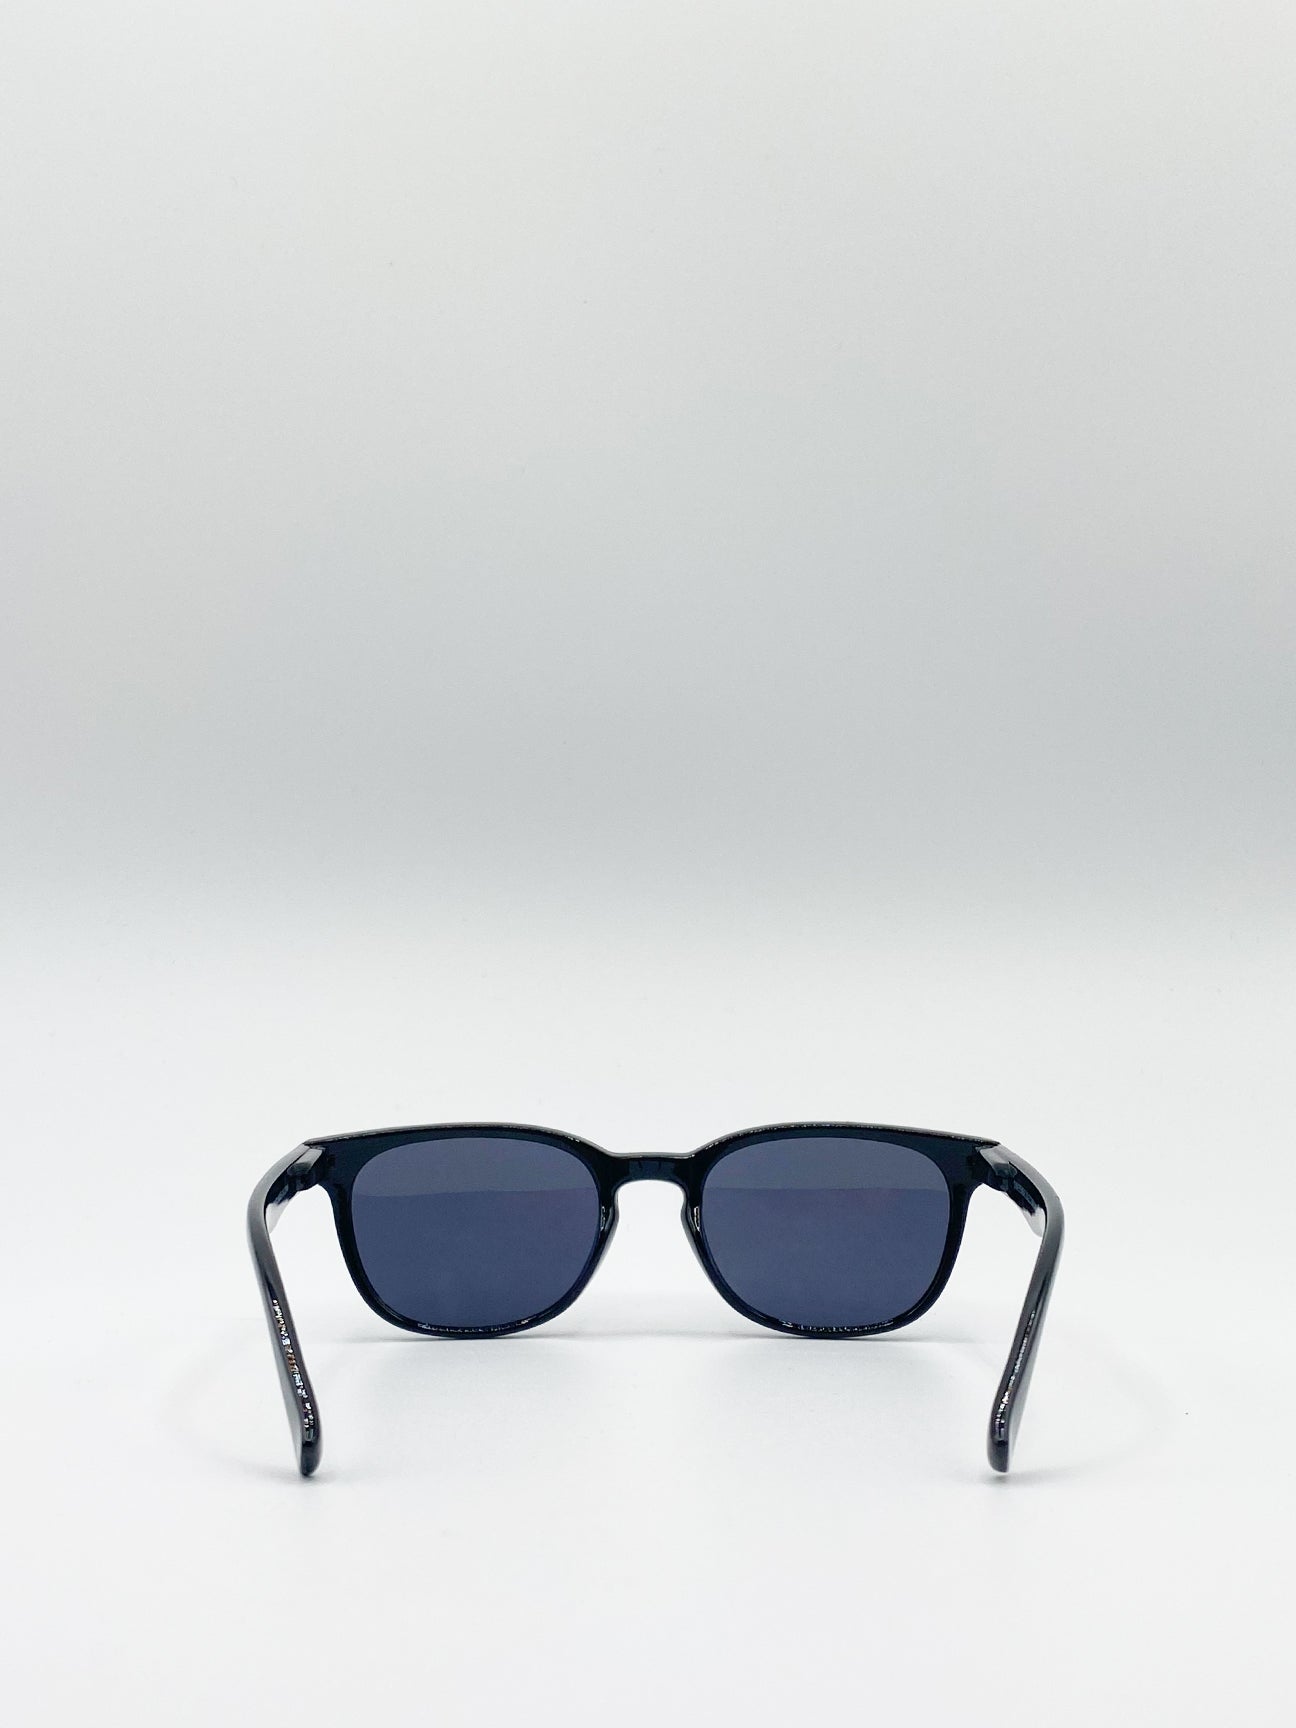 Black Smoke Lenses Classic Preppy Square Sunglasses With Key Hole Nosebridge